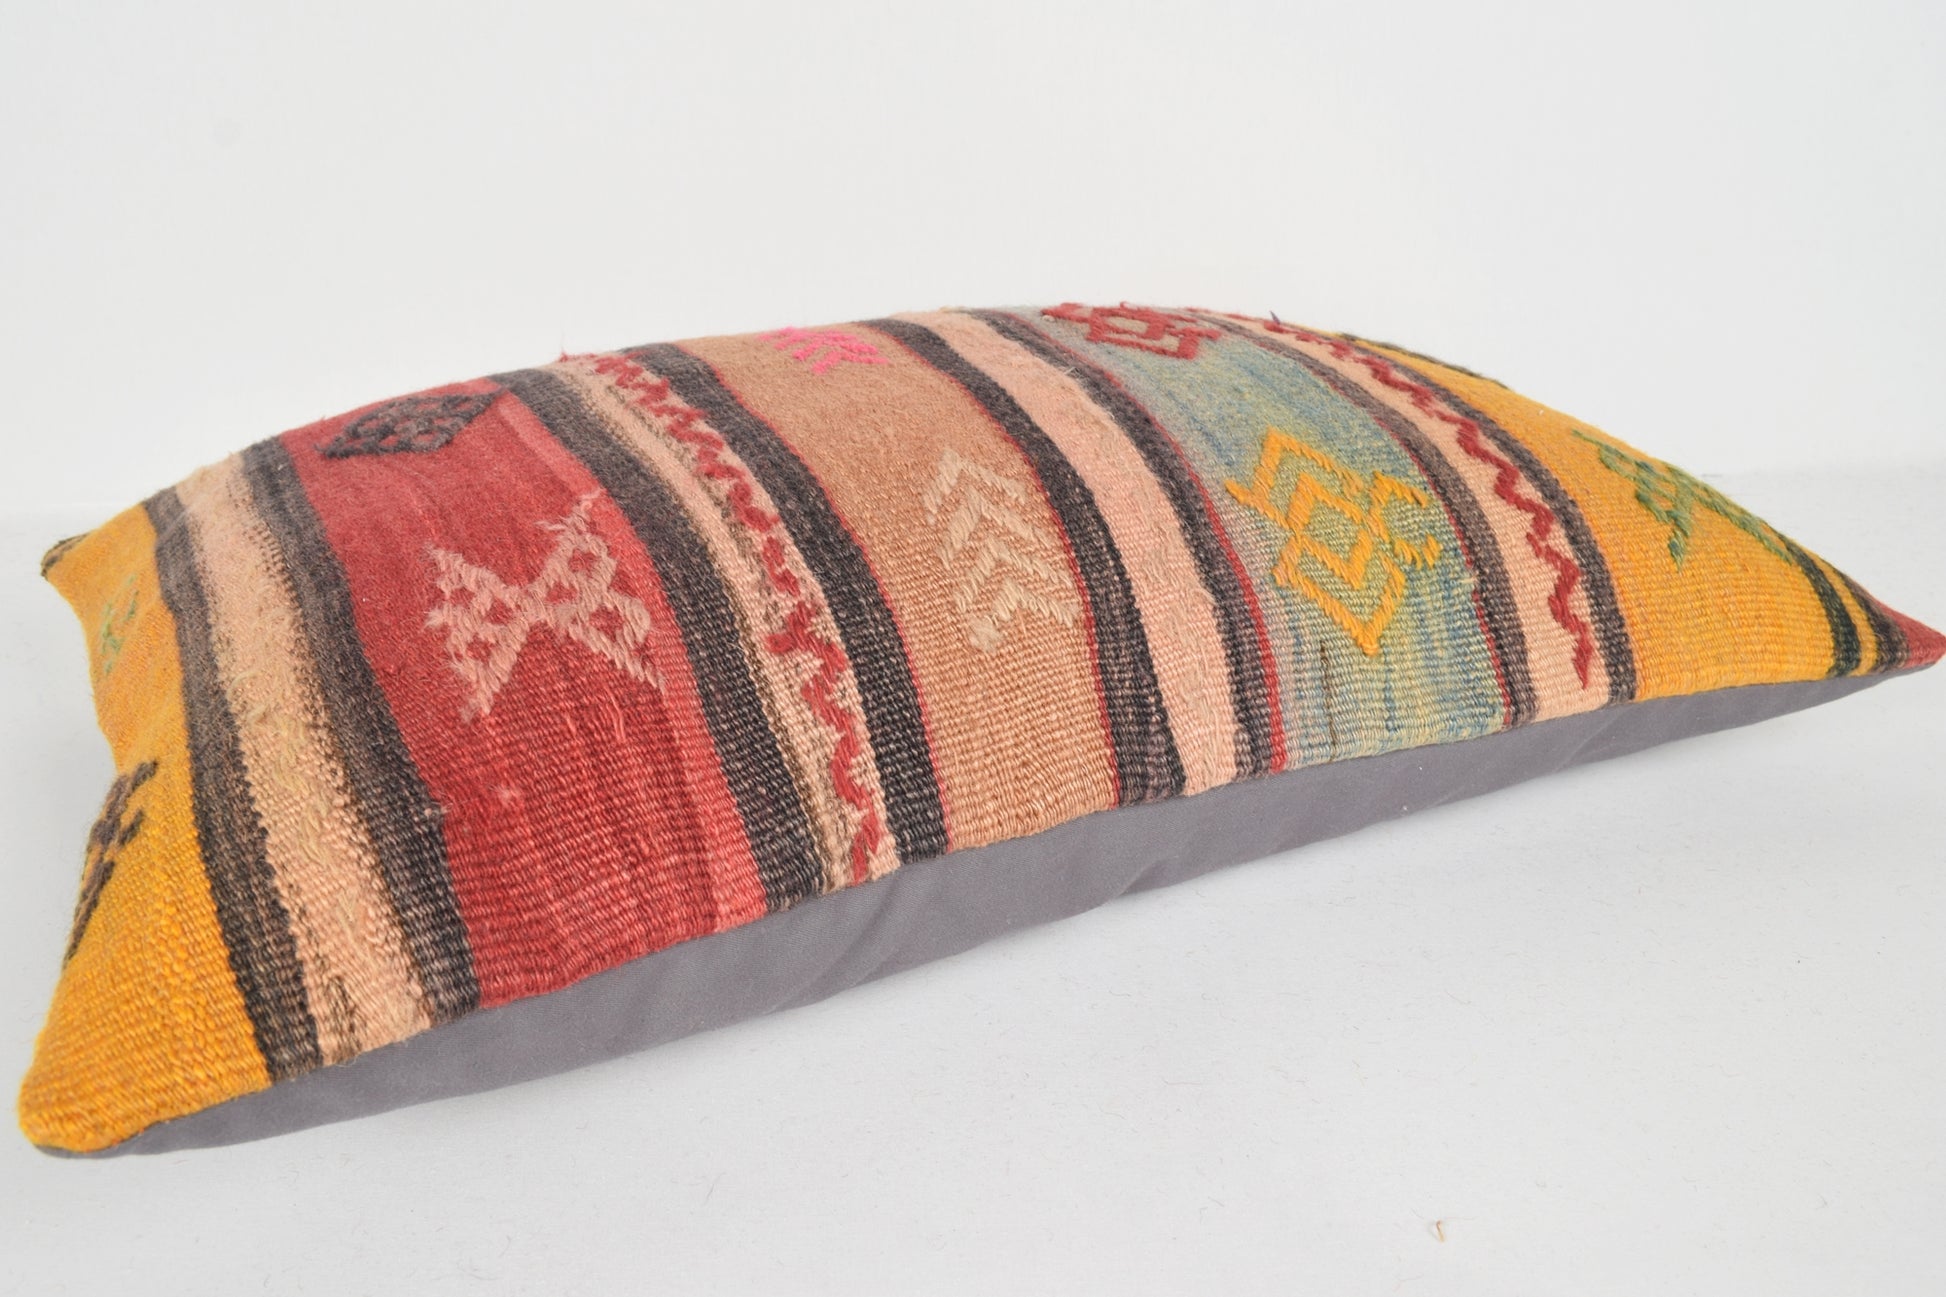 Turkish Kilim Tapestry Cushions 16x24 " 40x60 cm. E00682